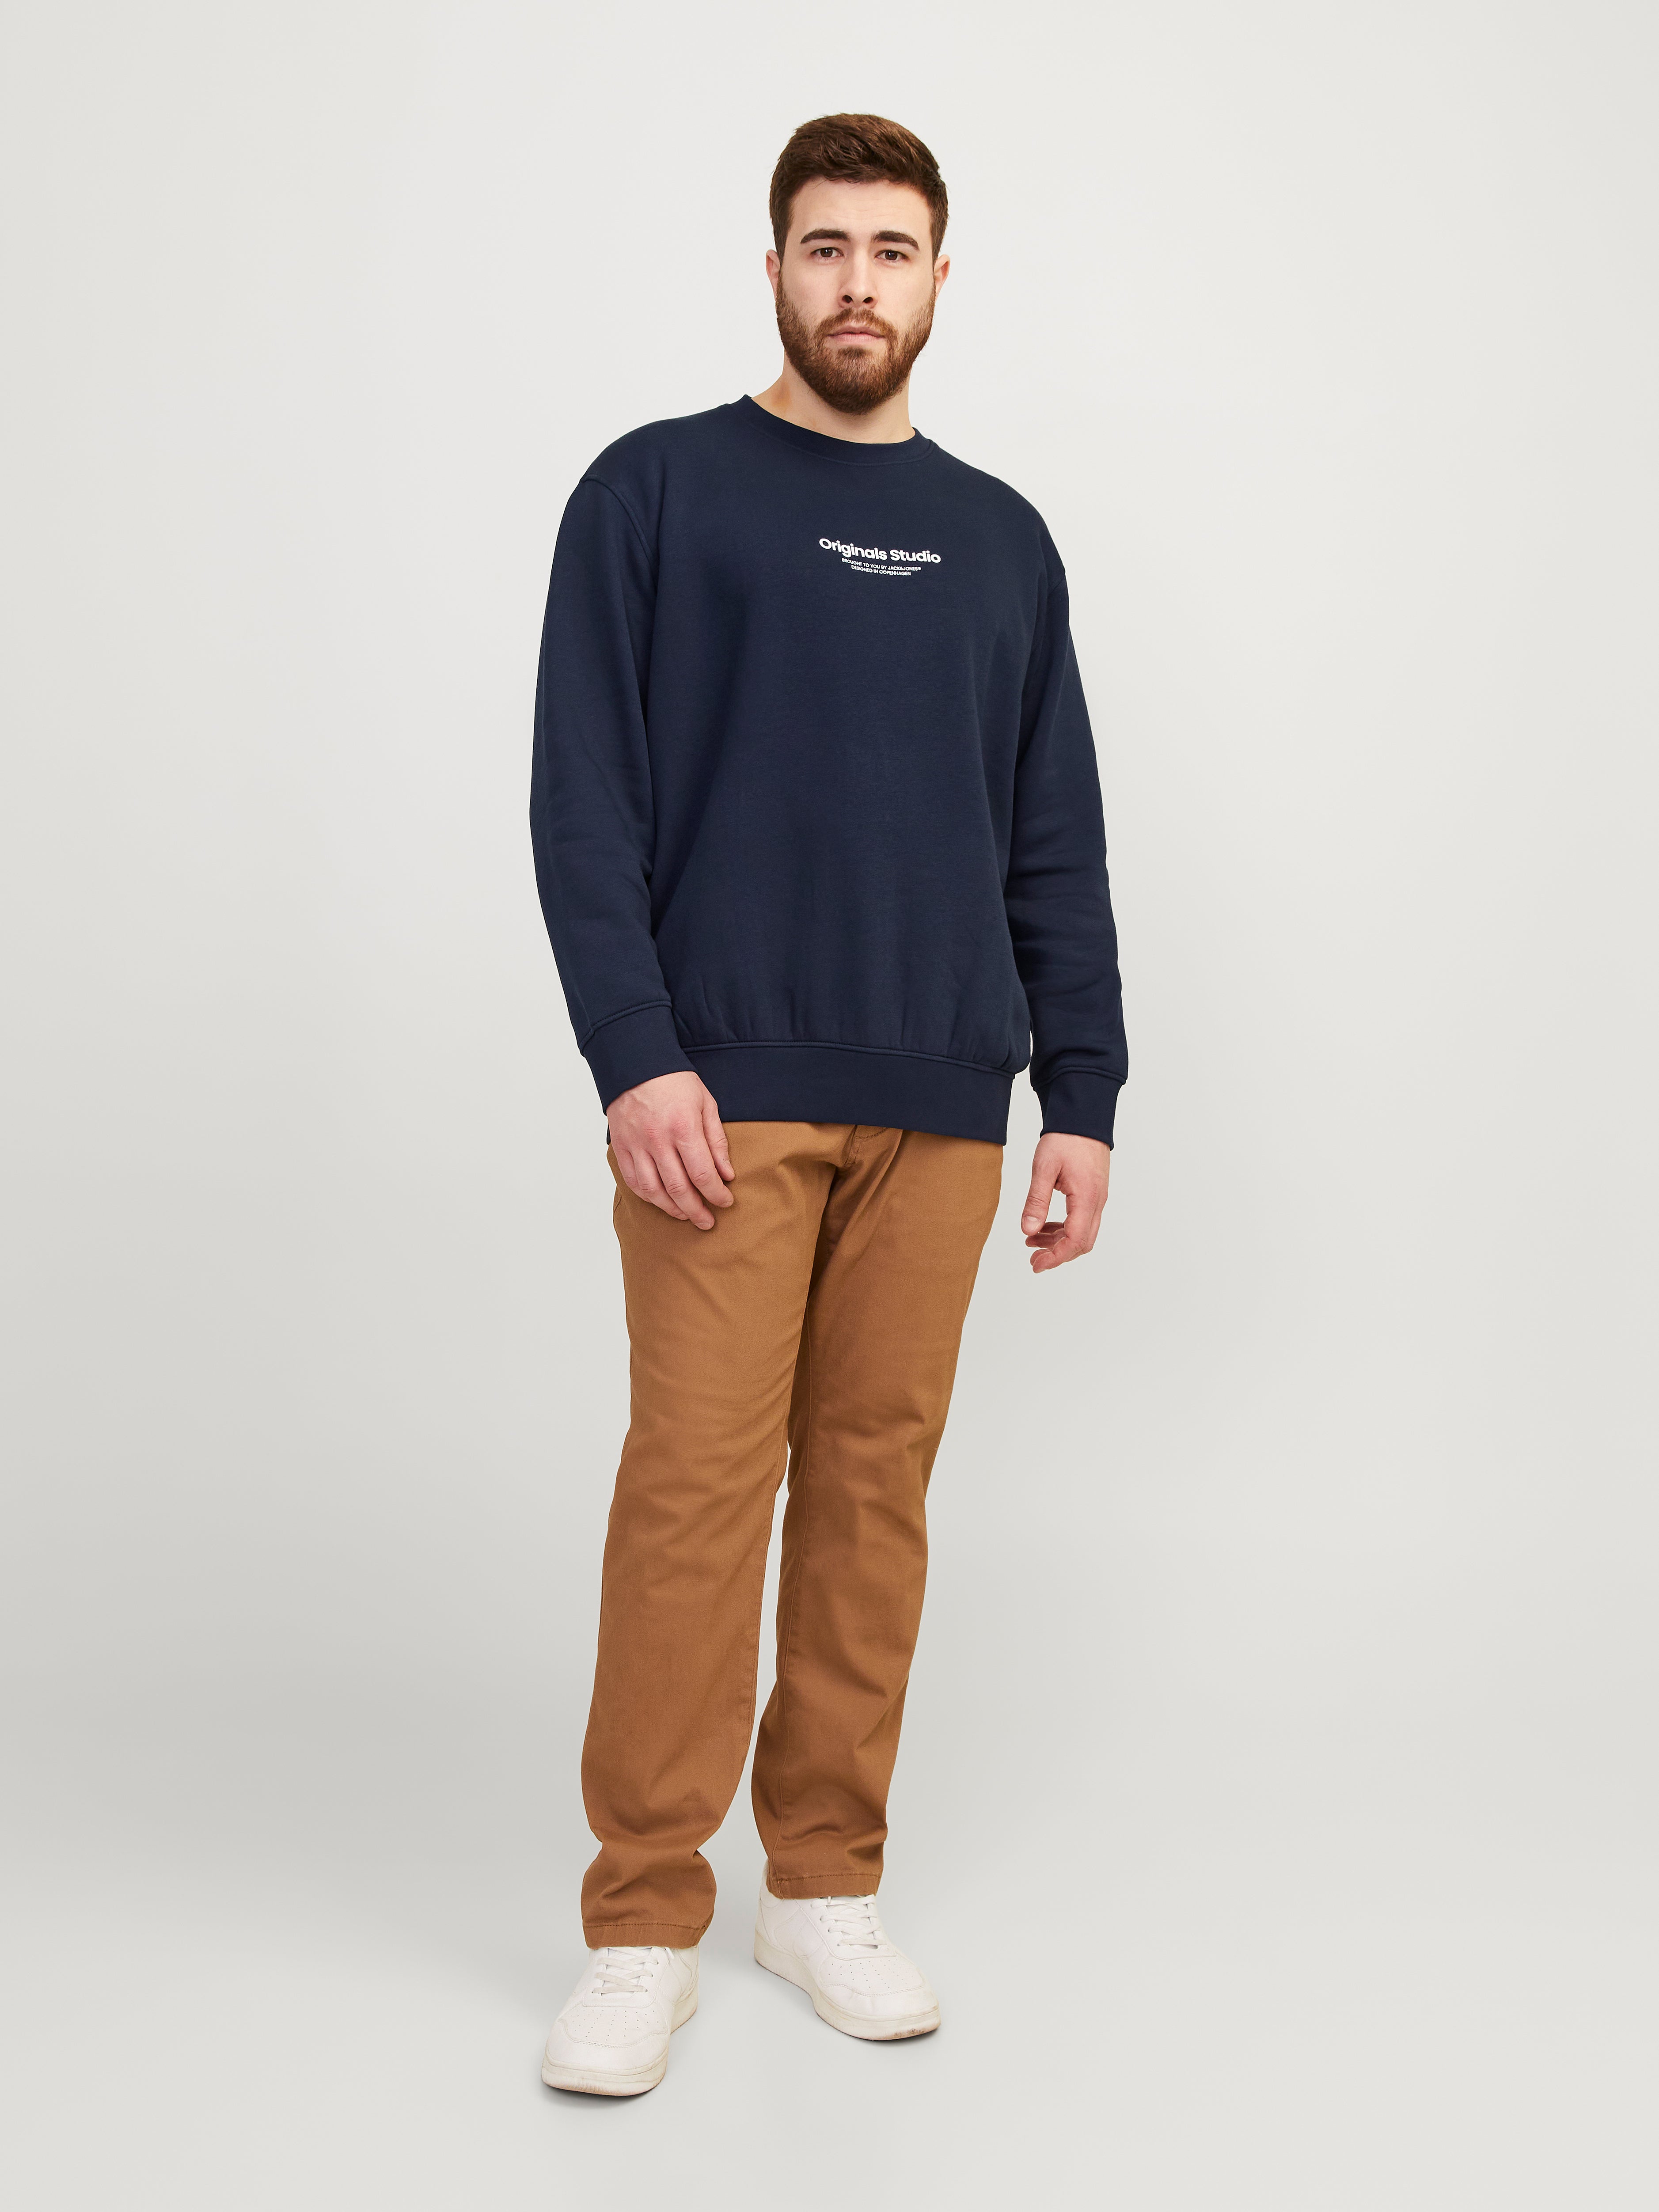 Plus Size Printed Crewn Neck Sweatshirt